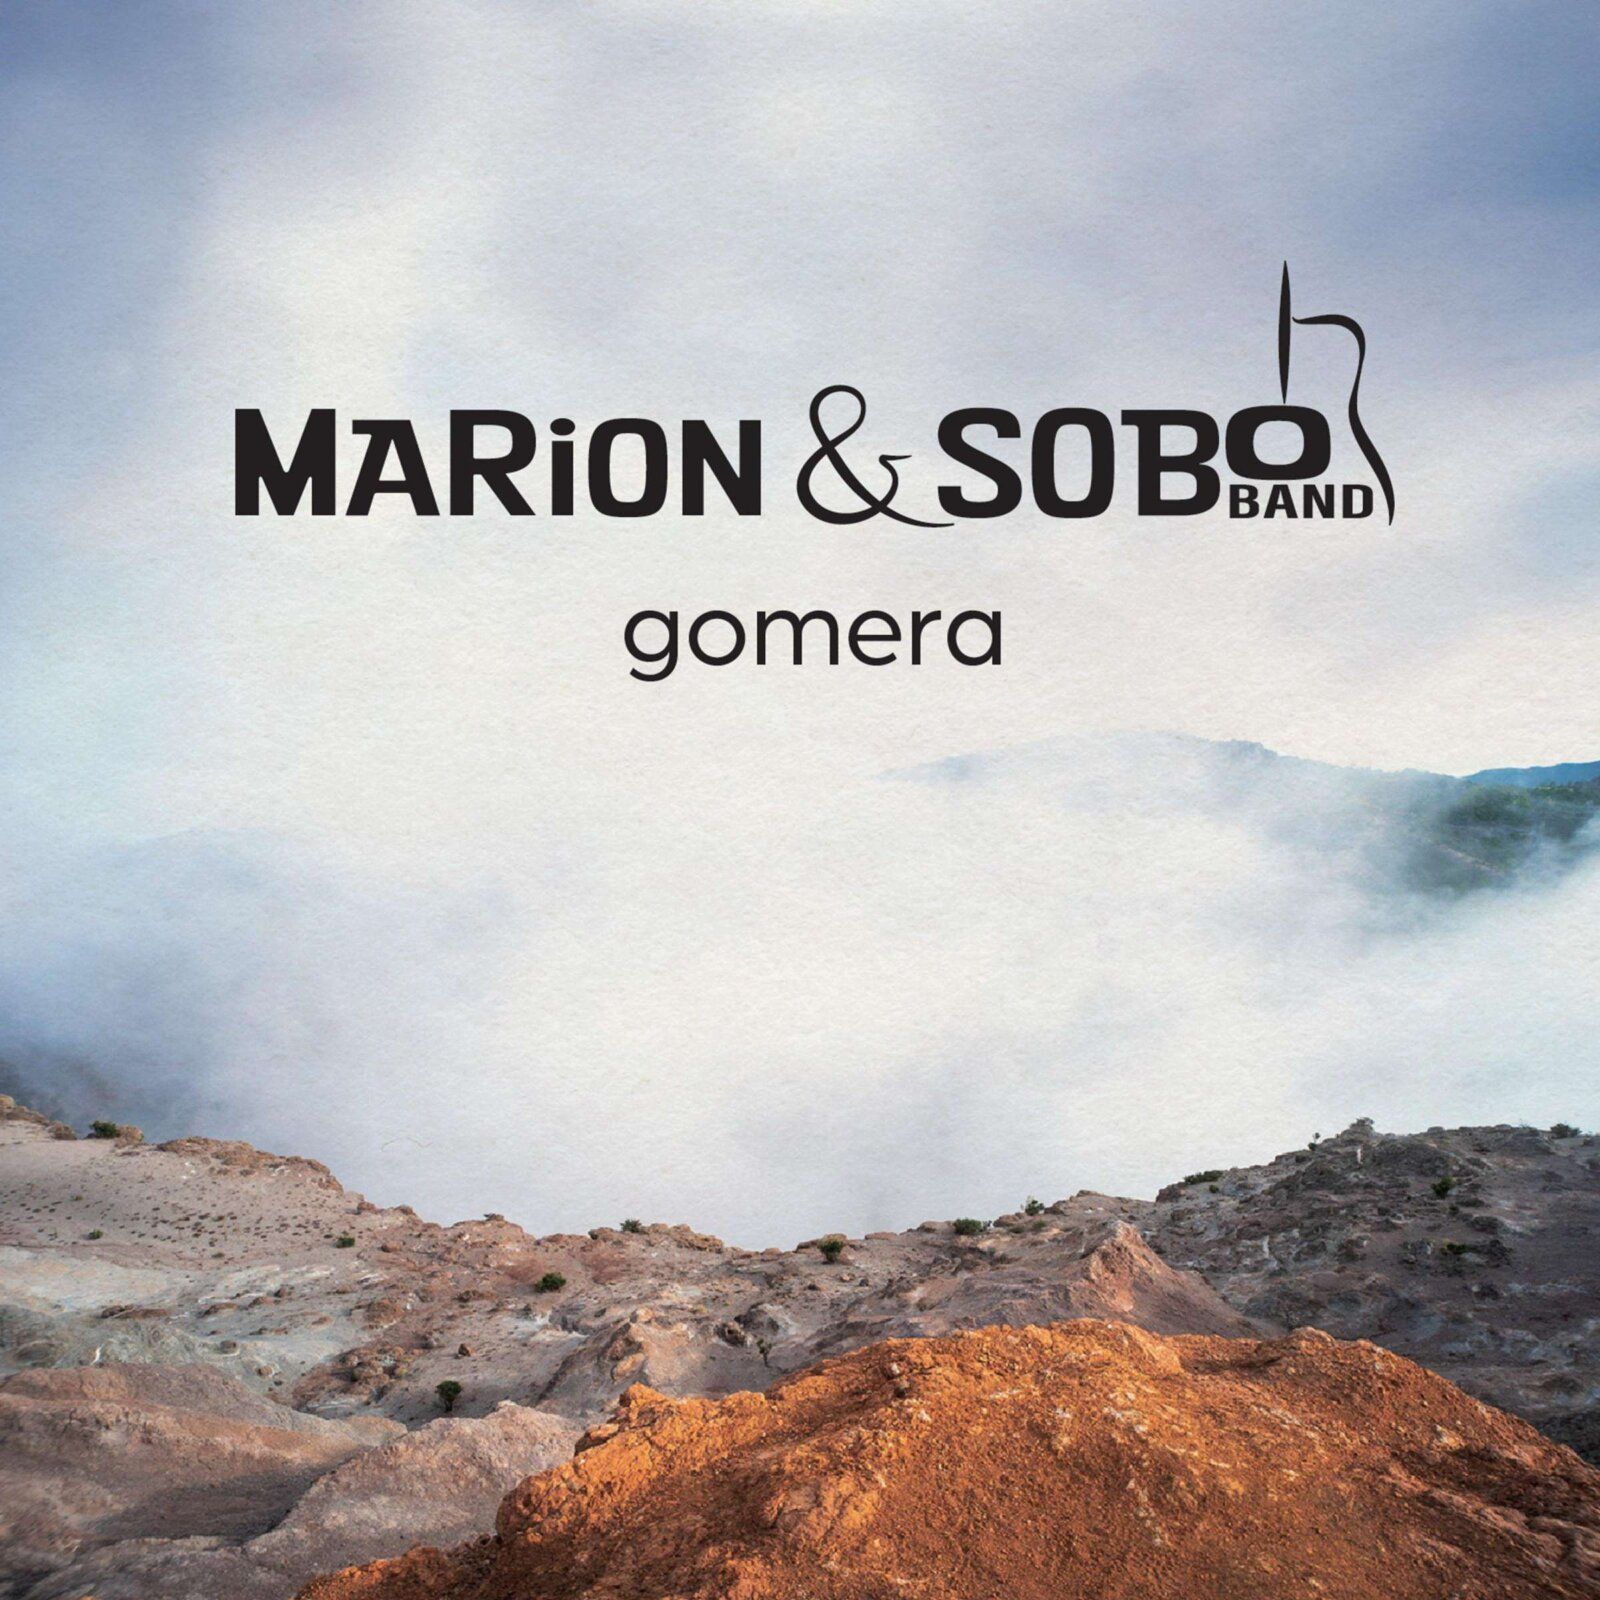 Marion & Sobo